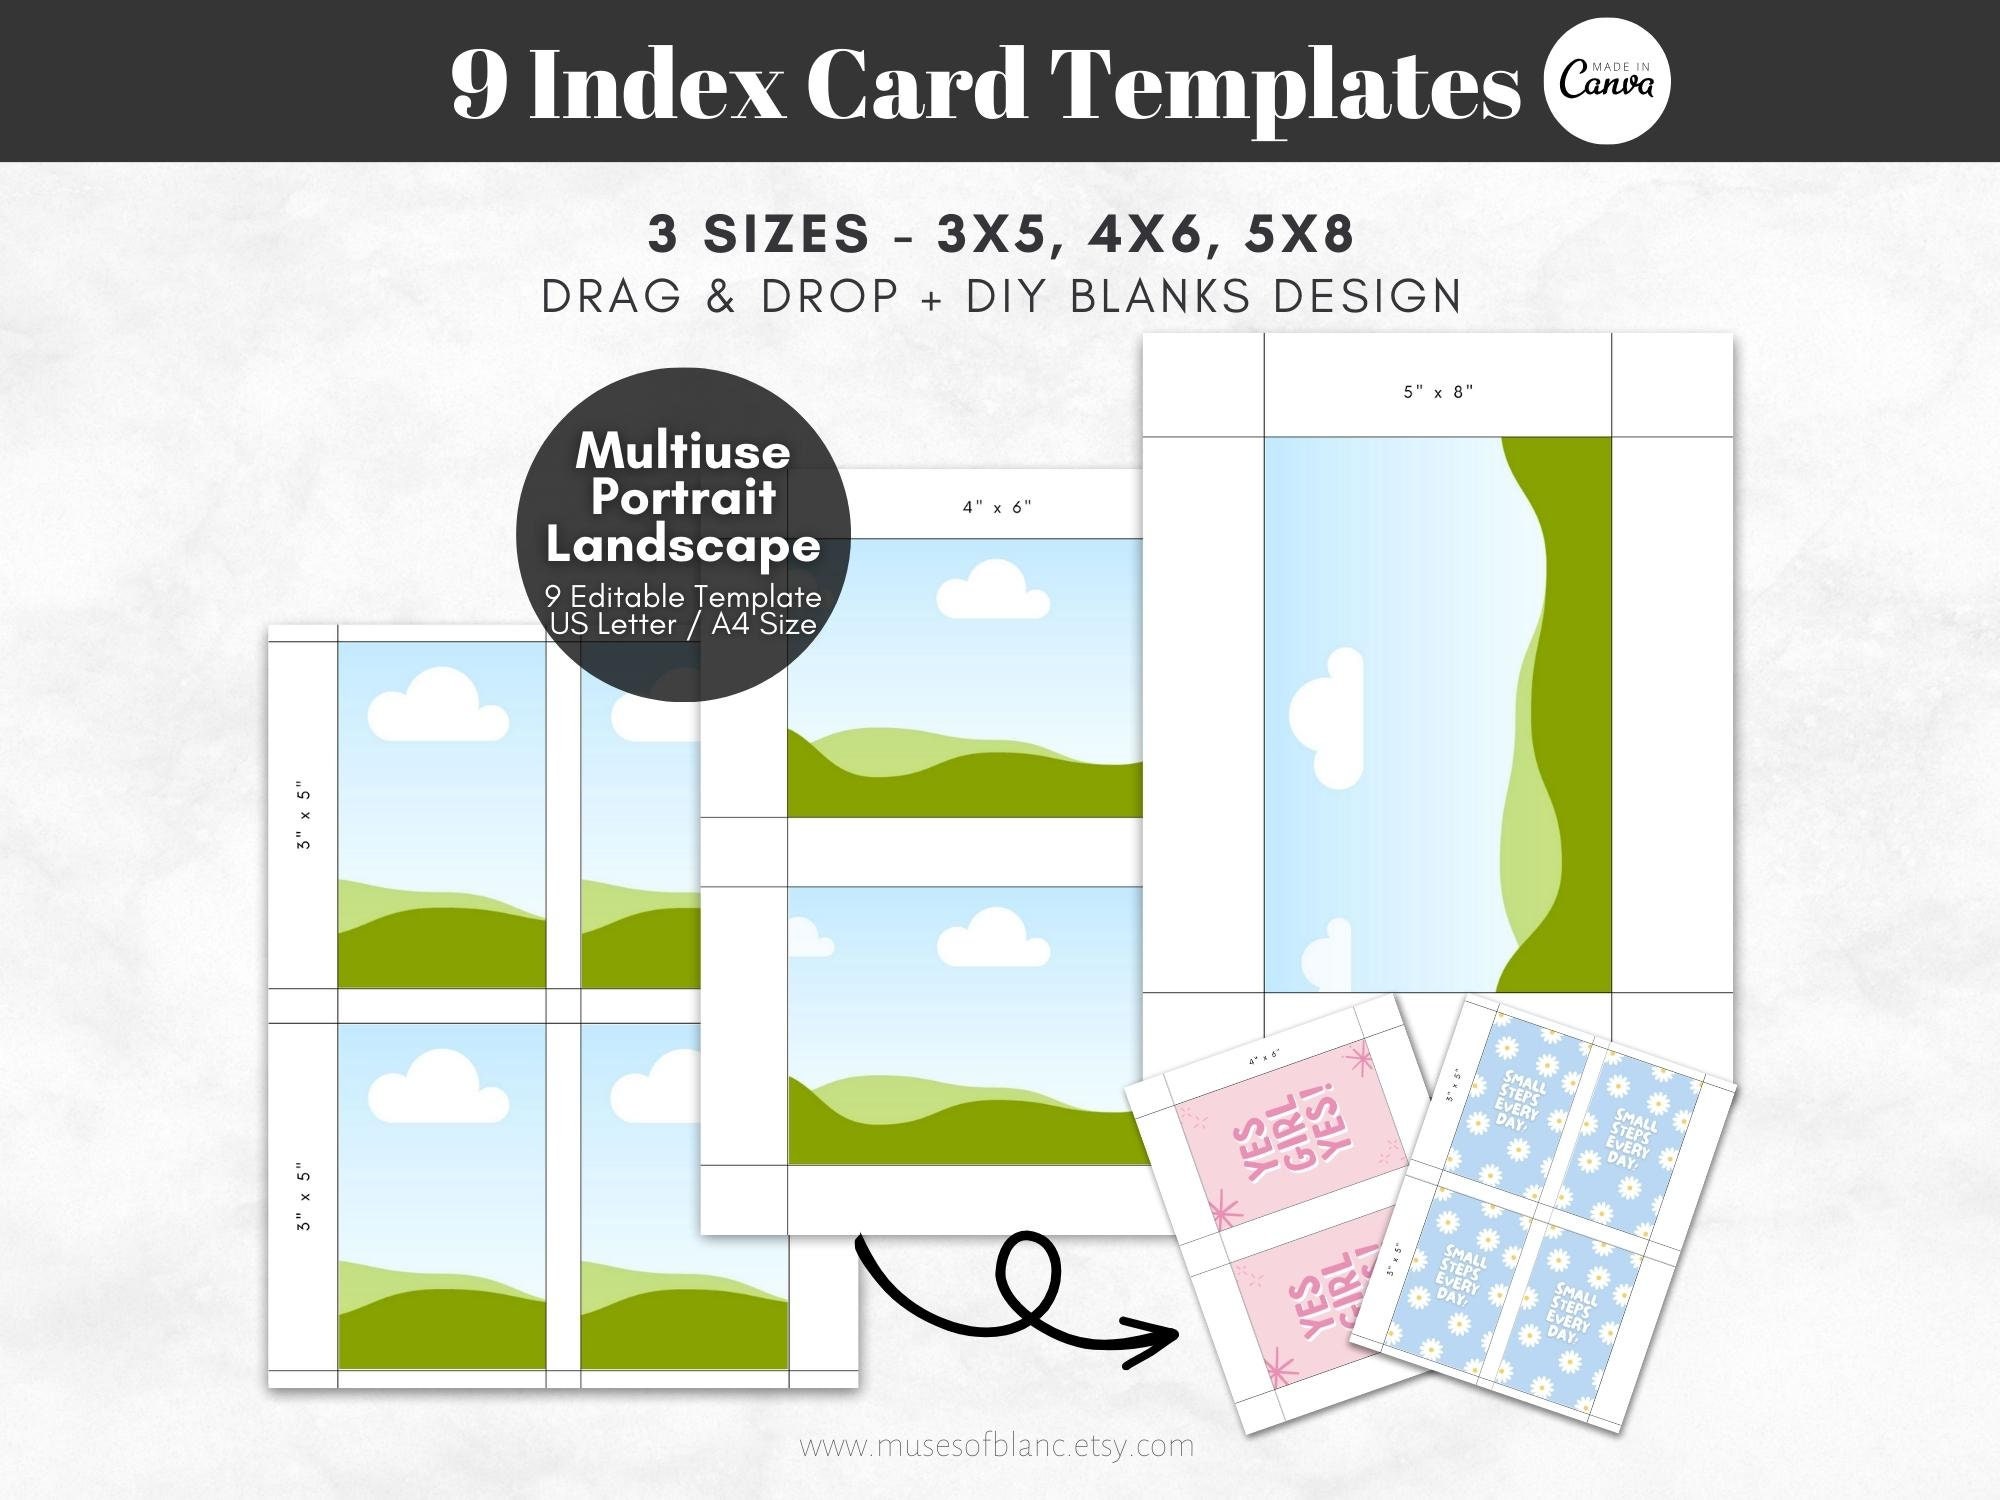 Printable Recipe Card Dividers, 4 X 6 Recipe Card Divider Template,  Editable Recipe Box Dividers, Modern Recipe Card Divider Tabs 